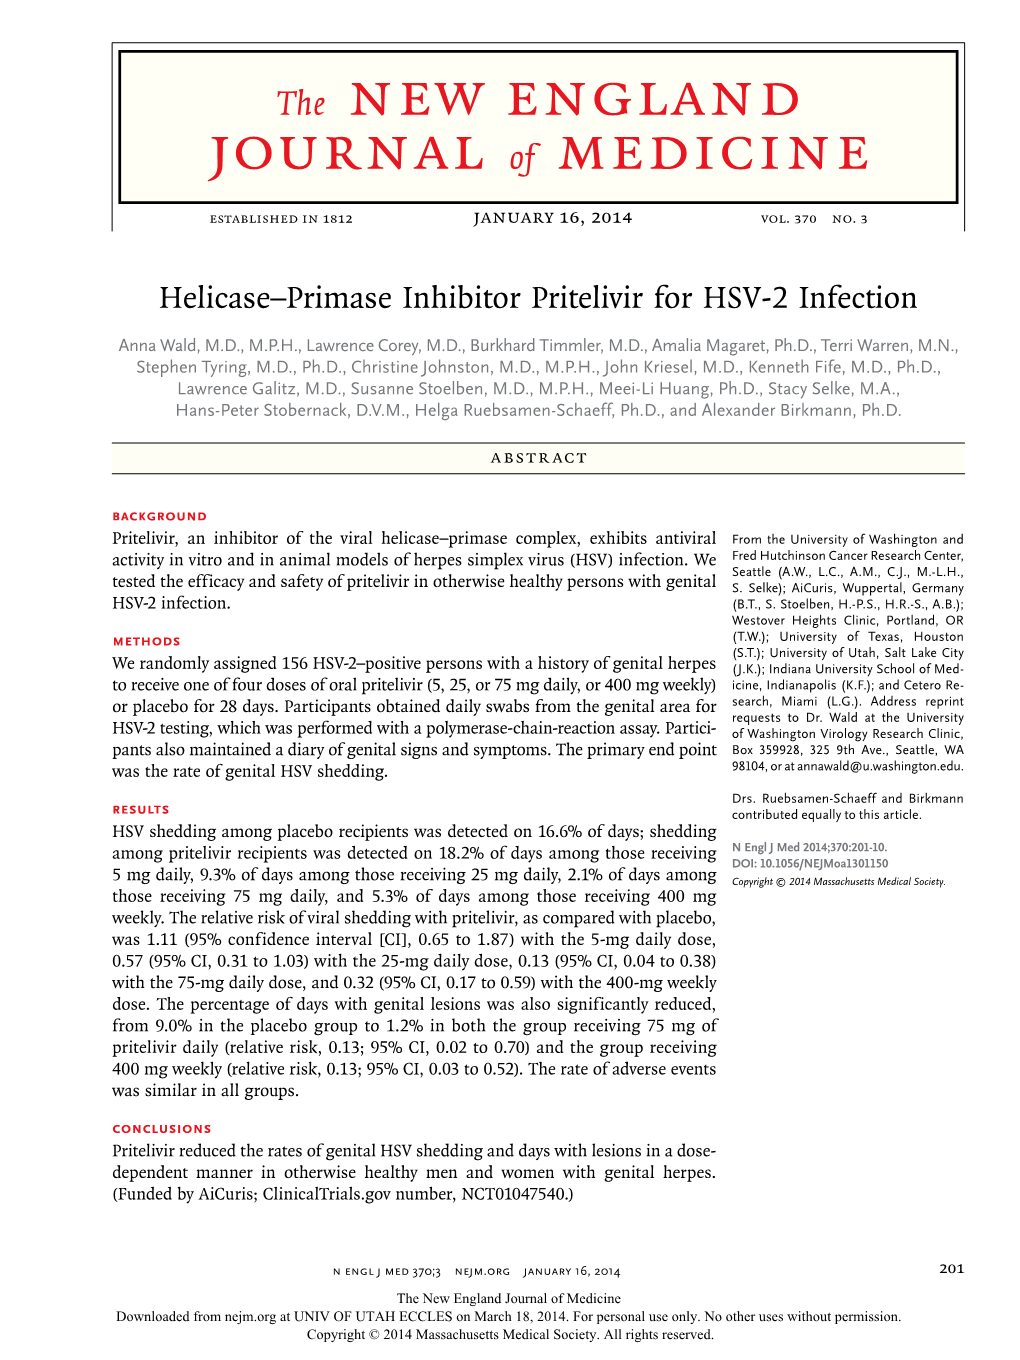 Helicase–Primase Inhibitor Pritelivir for HSV-2 Infection